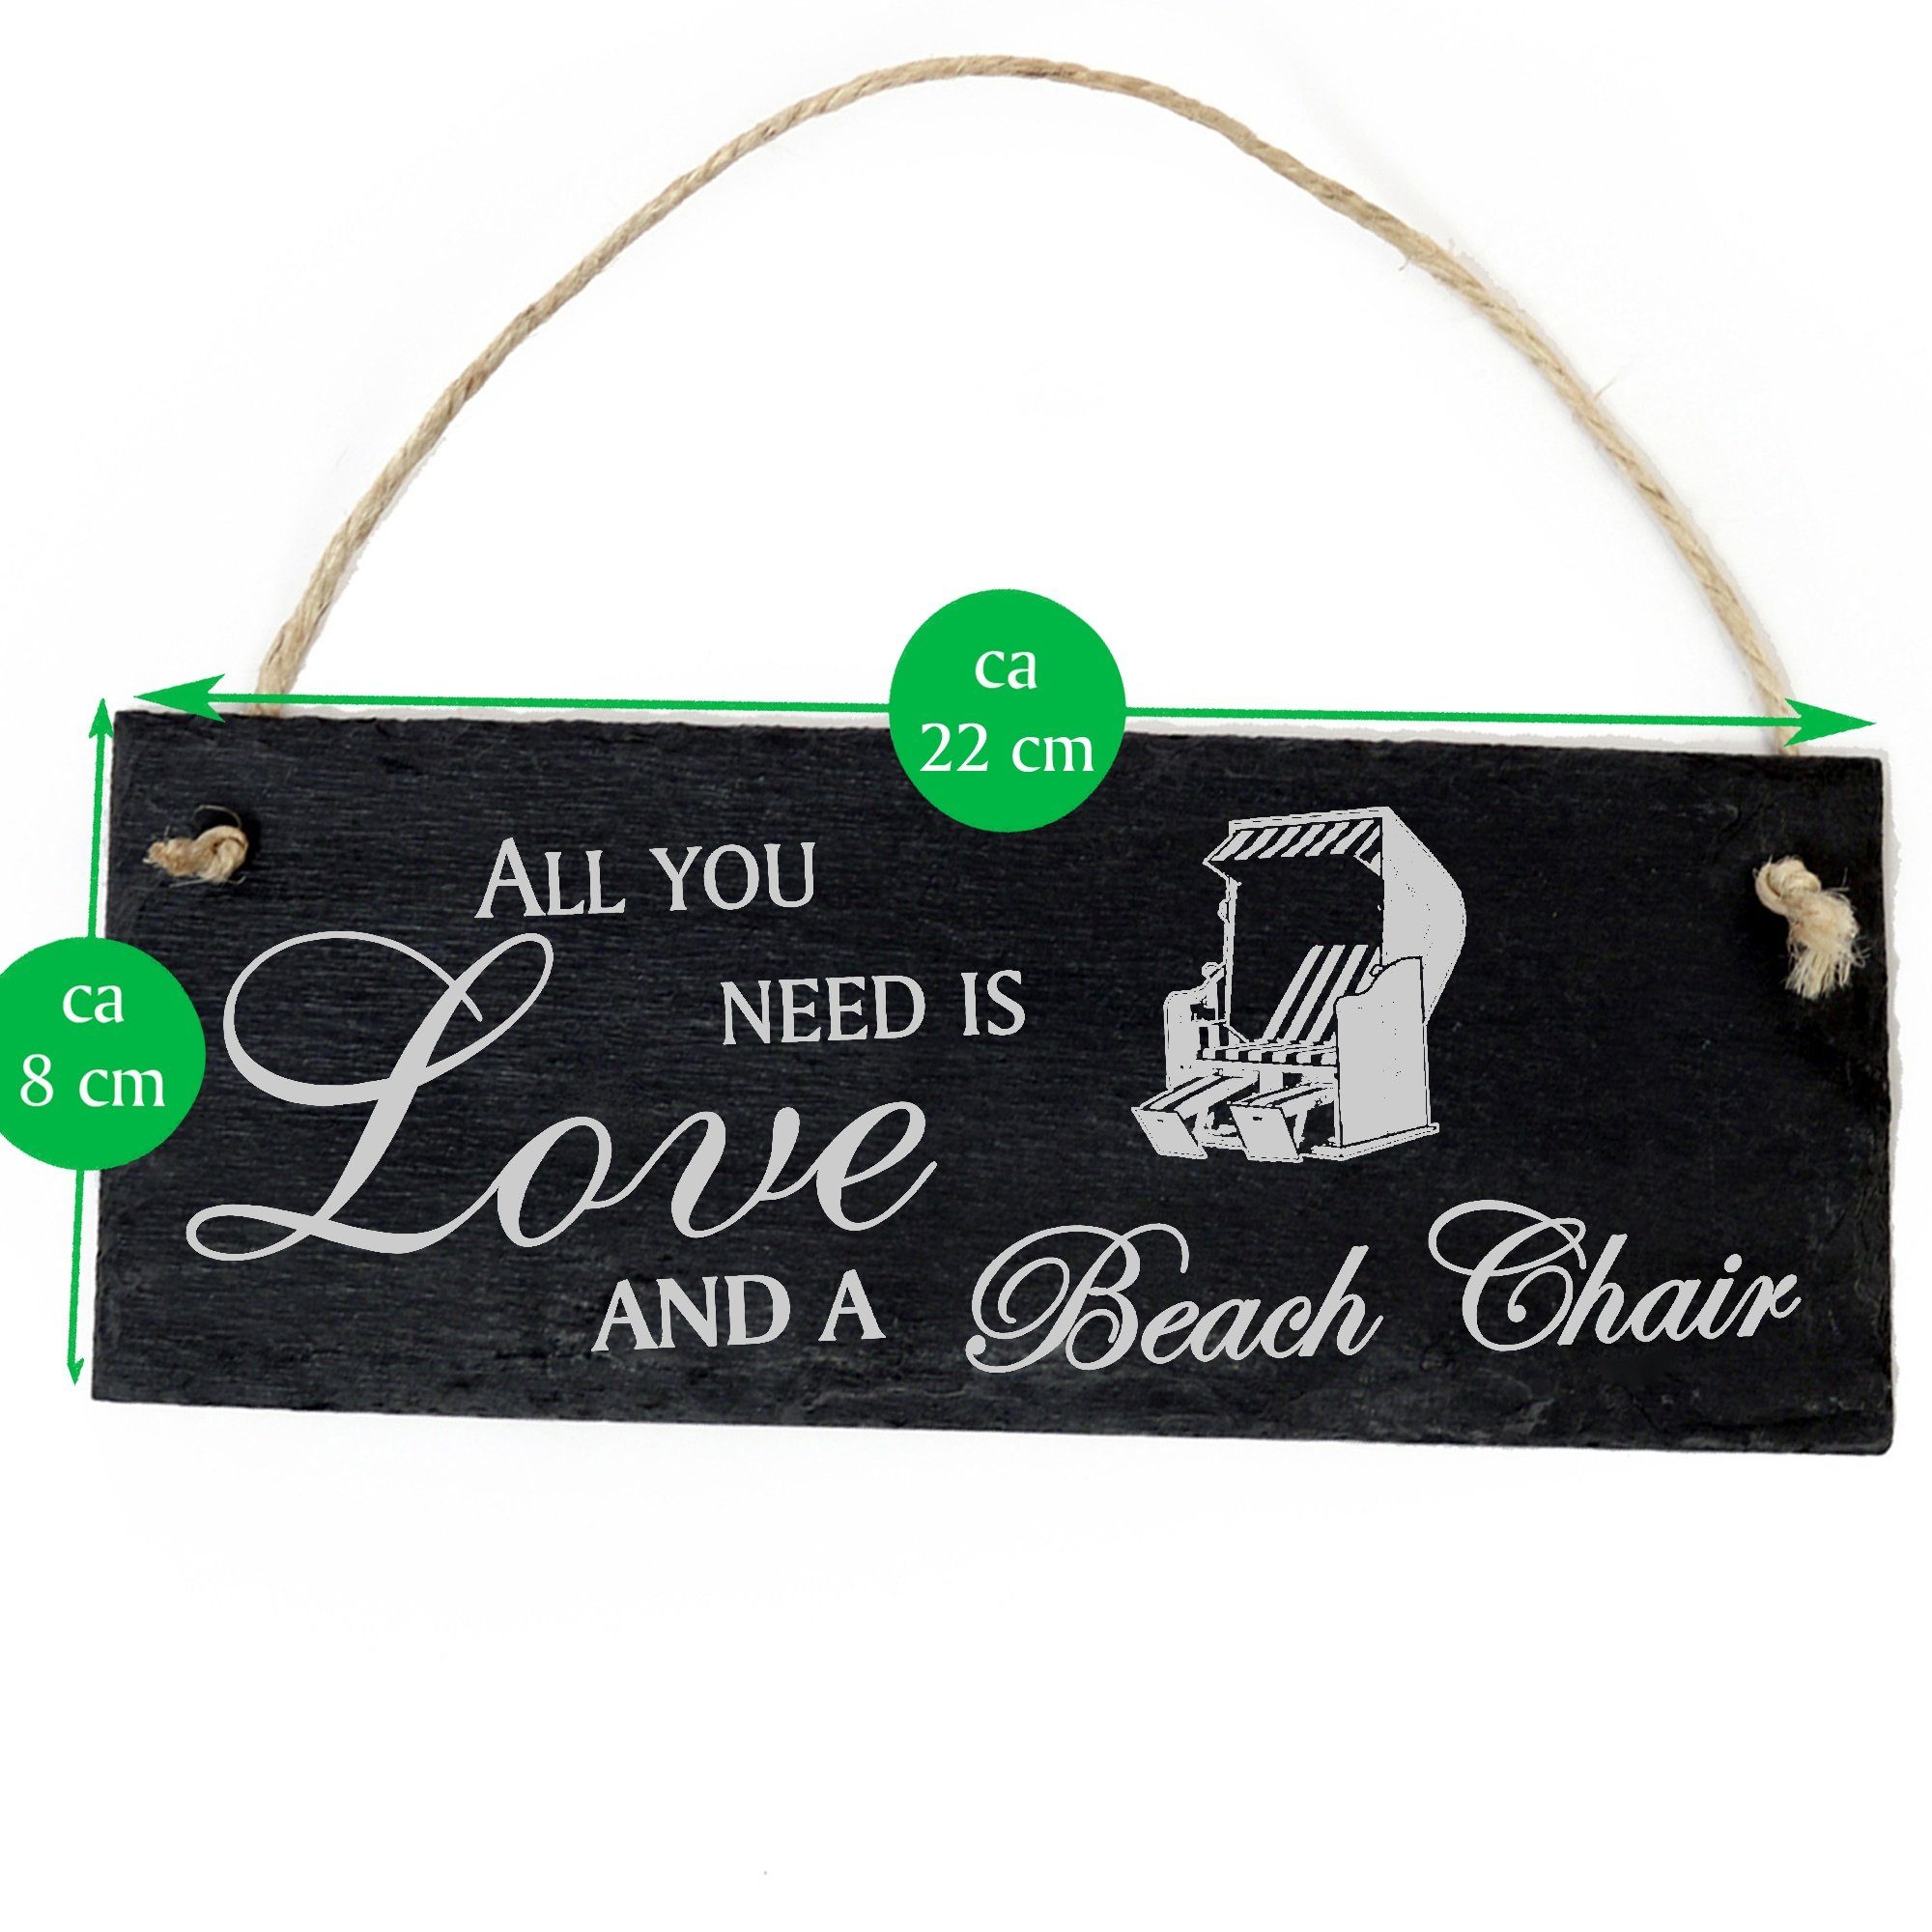 Dekolando Hängedekoration Strandkorb 22x8cm Chair All Love a is you need and Beach